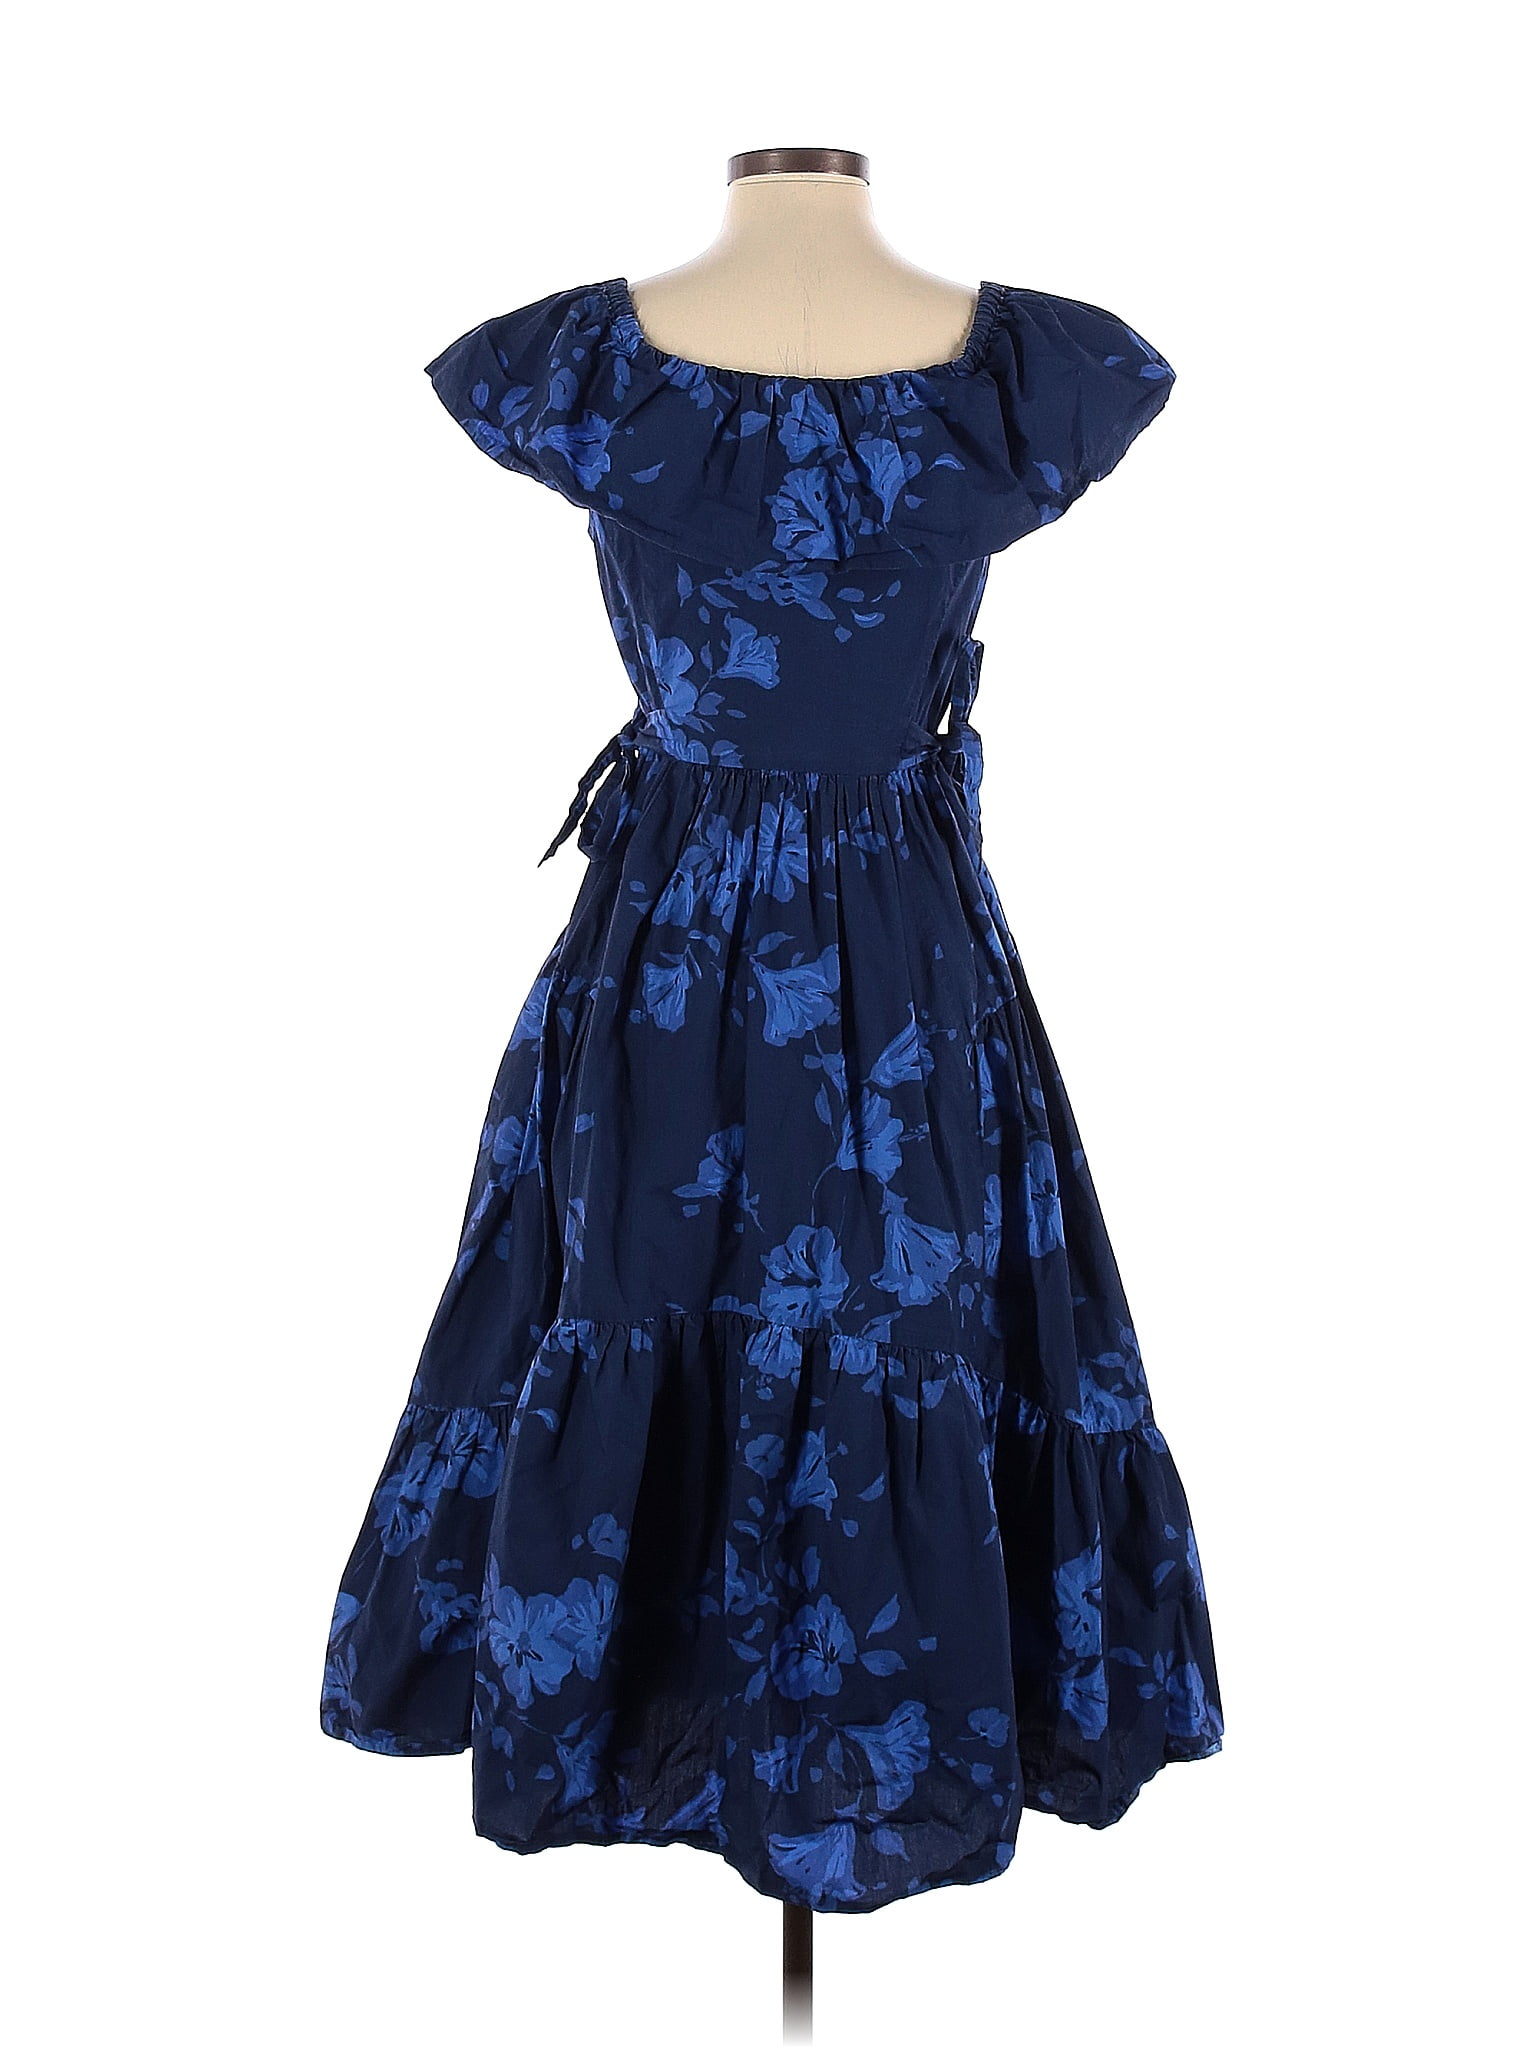 Kate Spade Blue Floral Dress